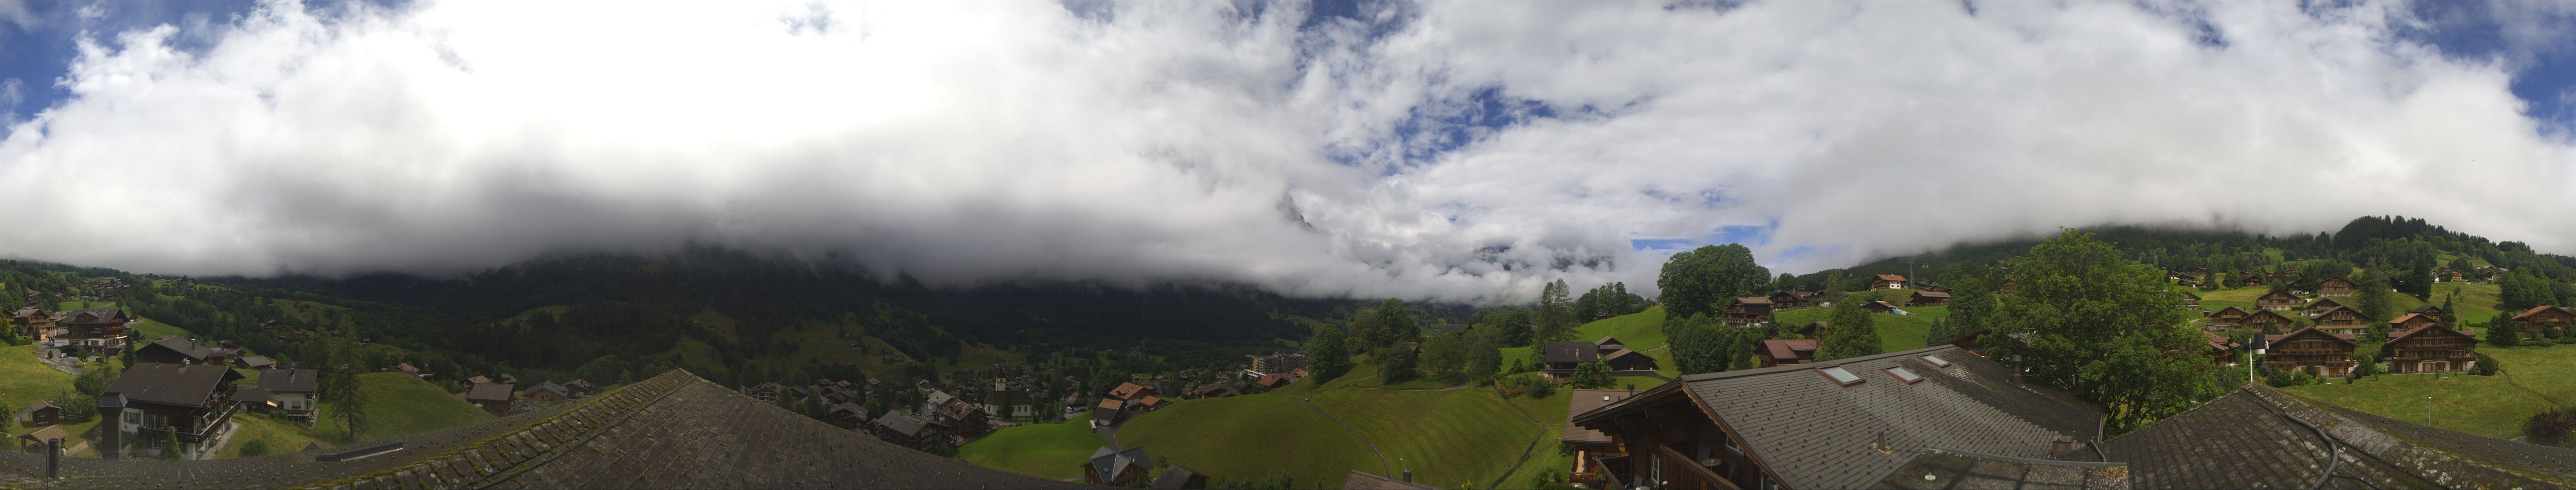 Grindelwald: Kirchbühl